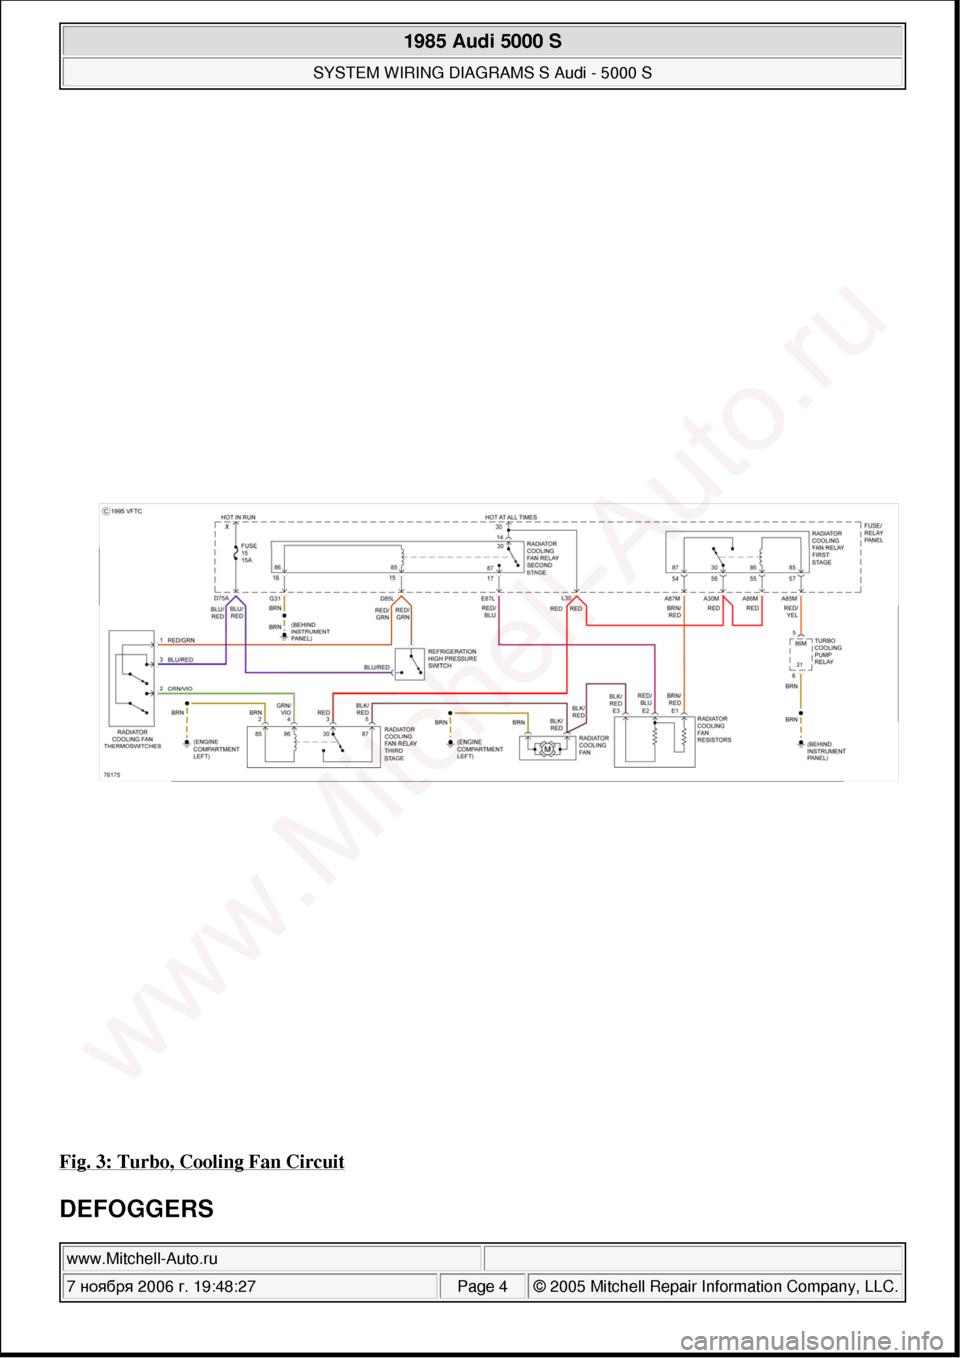 AUDI 5000S 1985 C2 System Wiring Diagram 
Fig. 3: Turbo, Cooling Fan Circuit 
DEFOGGERS 
 
1985 Audi 5000 S 
SYSTEM WIRING DIAGRAMS S Audi - 5000 S  
www.Mitchell-Auto.ru  
7 ноября  2006 г. 19:48:27Page 4 © 2005 Mitchell Repair Info